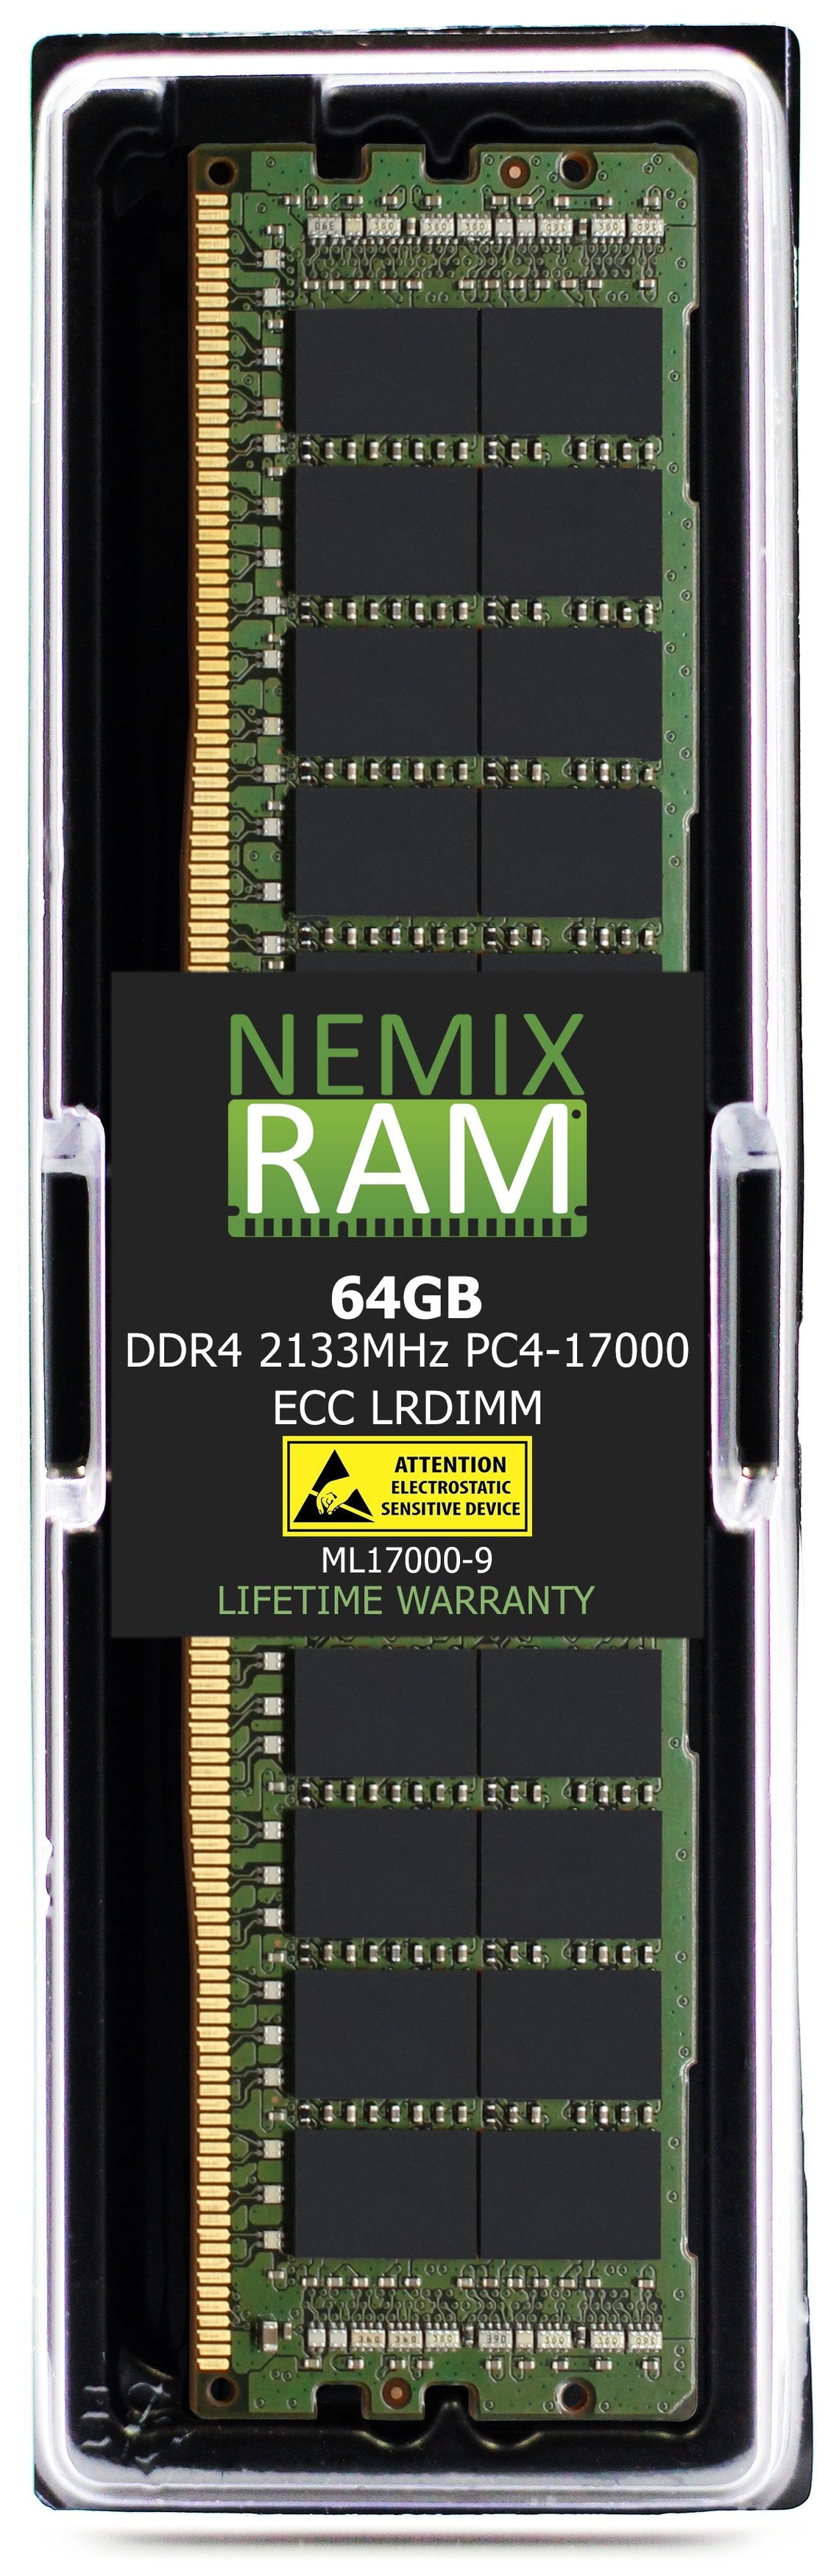 Hynix HMAA8GL7AMR4N-TF 64GB DDR4 2133MHZ PC4-17000 LRDIMM Compatible Memory Module